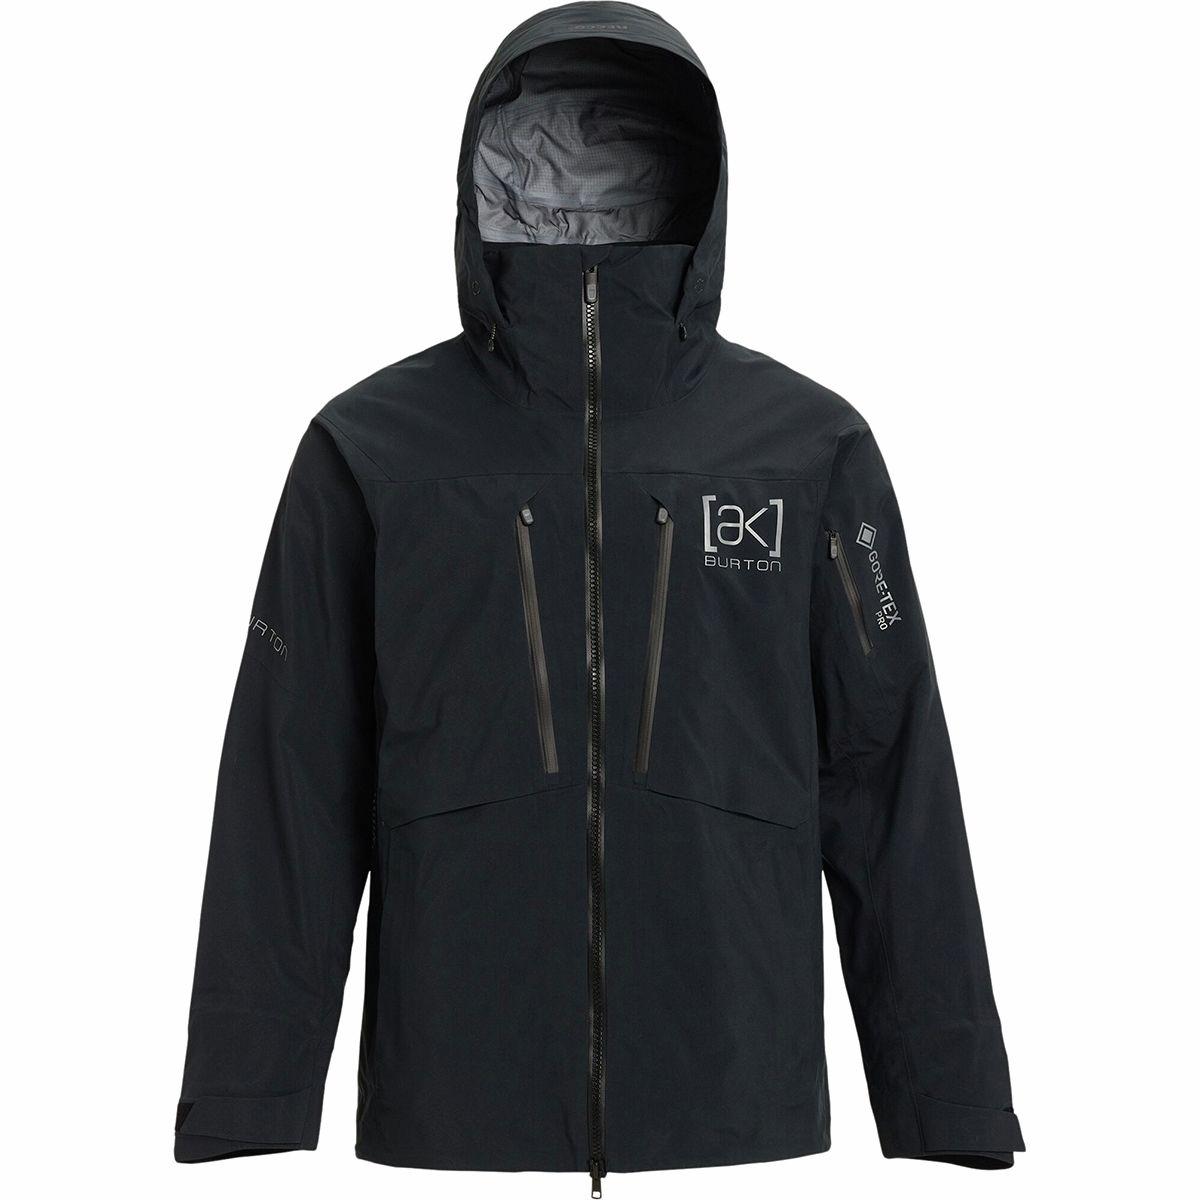 Burton Ak Gore-tex 3l Pro Hover Jacket in Black for Men - Lyst